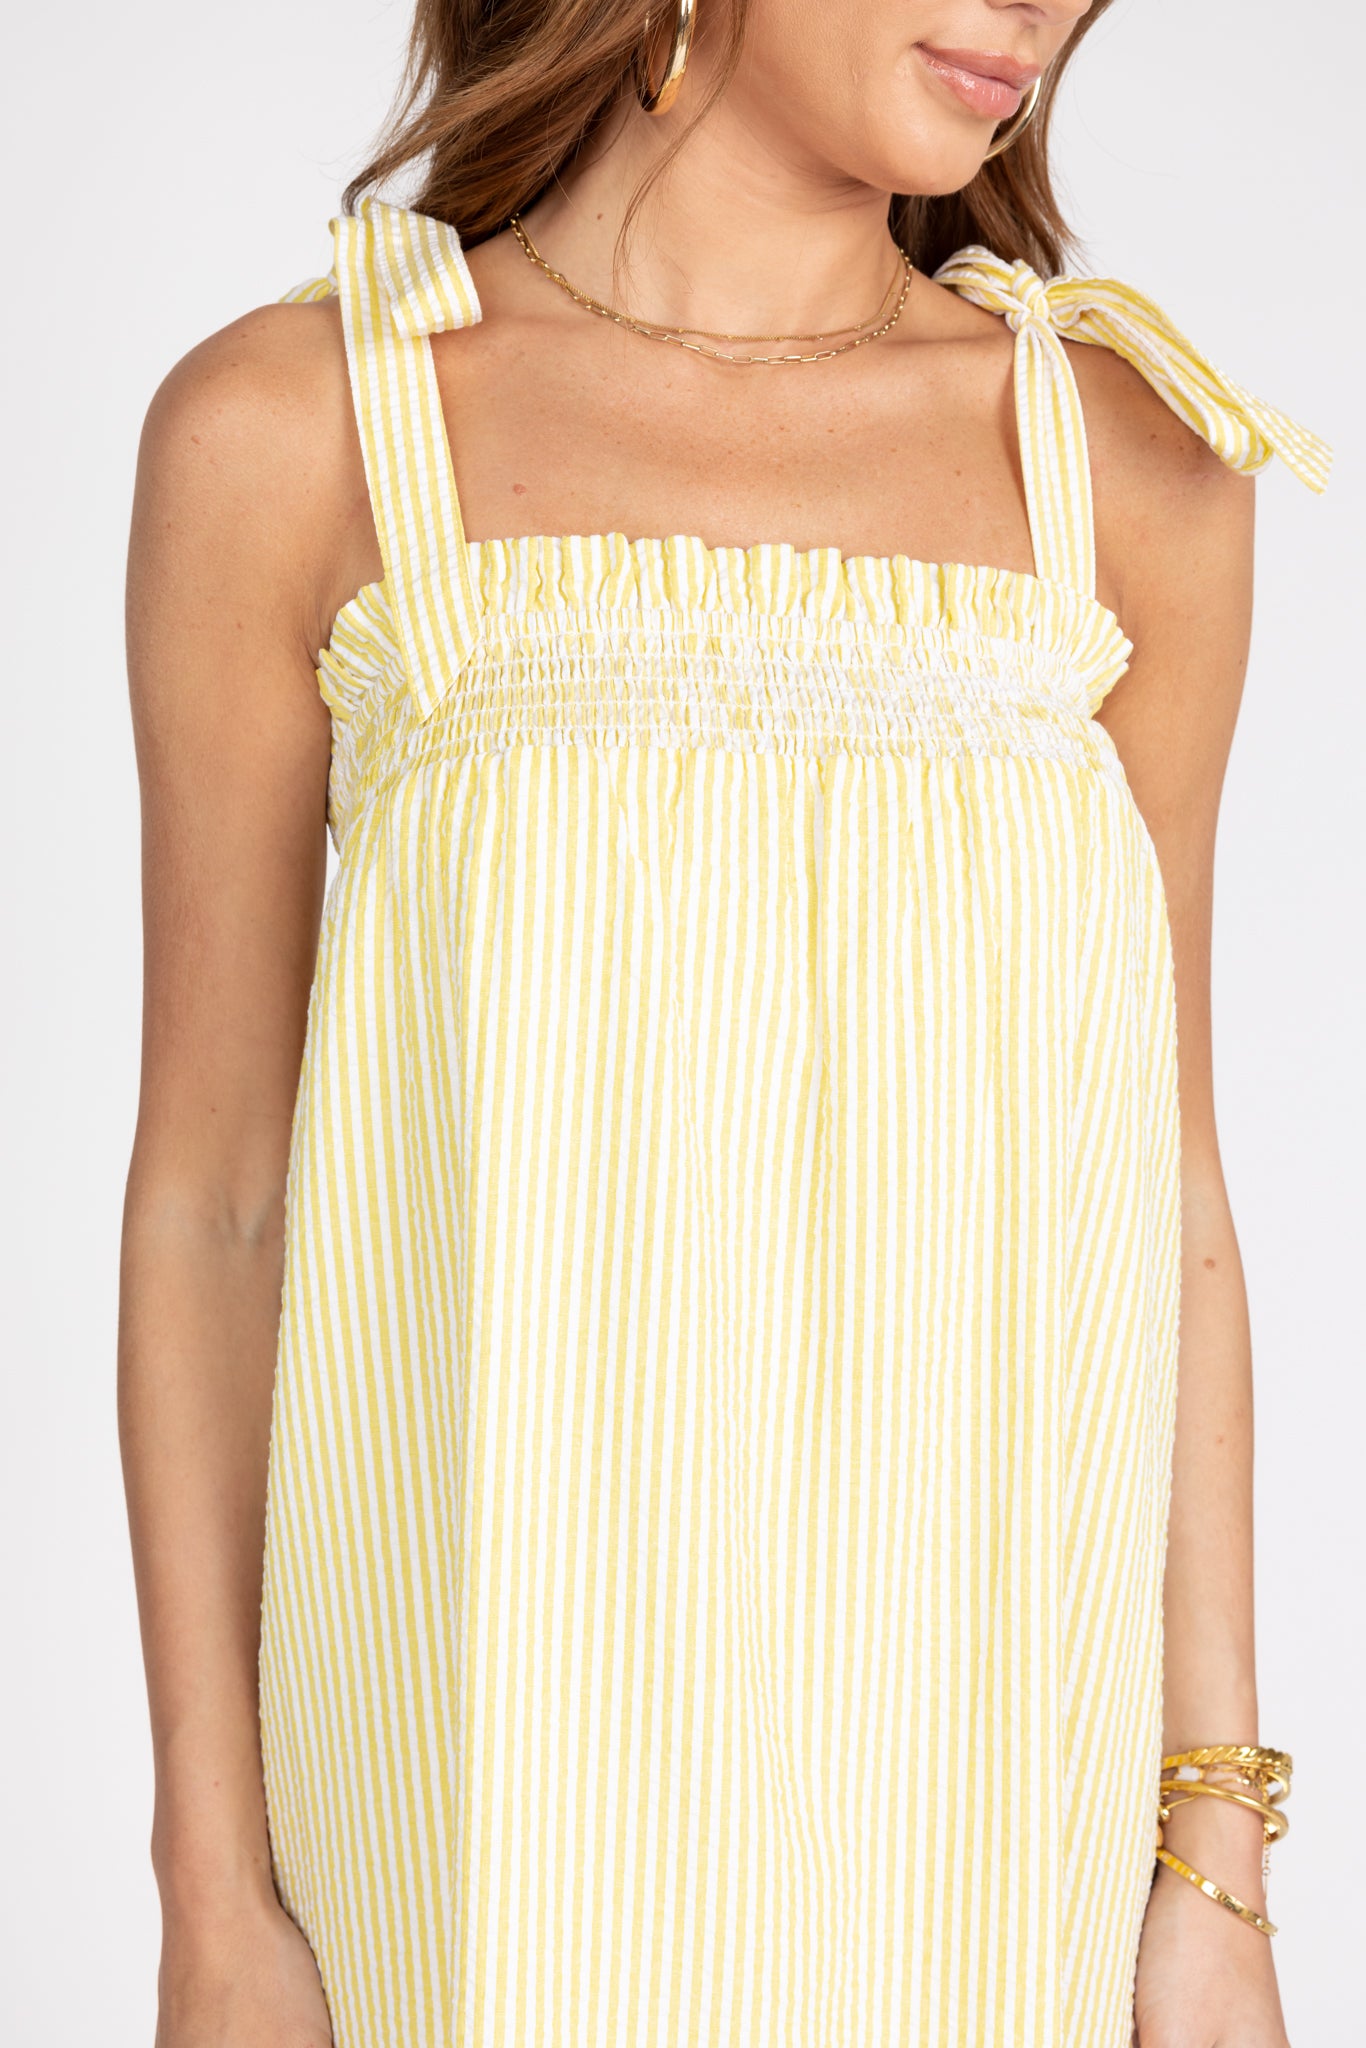 Nicolette Dress- Yellow